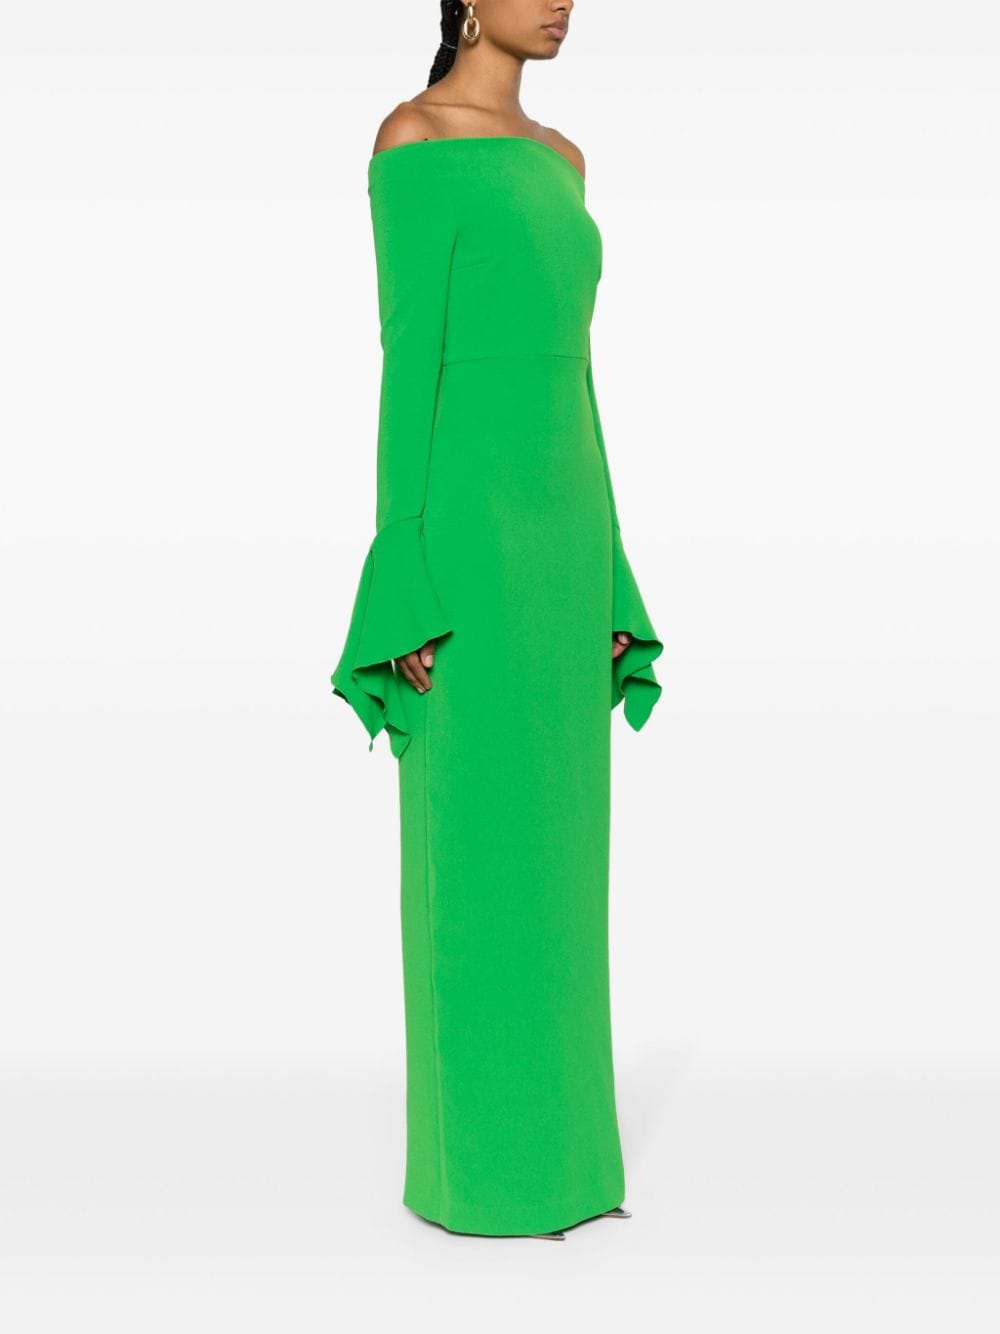 Solace London Dresses Green